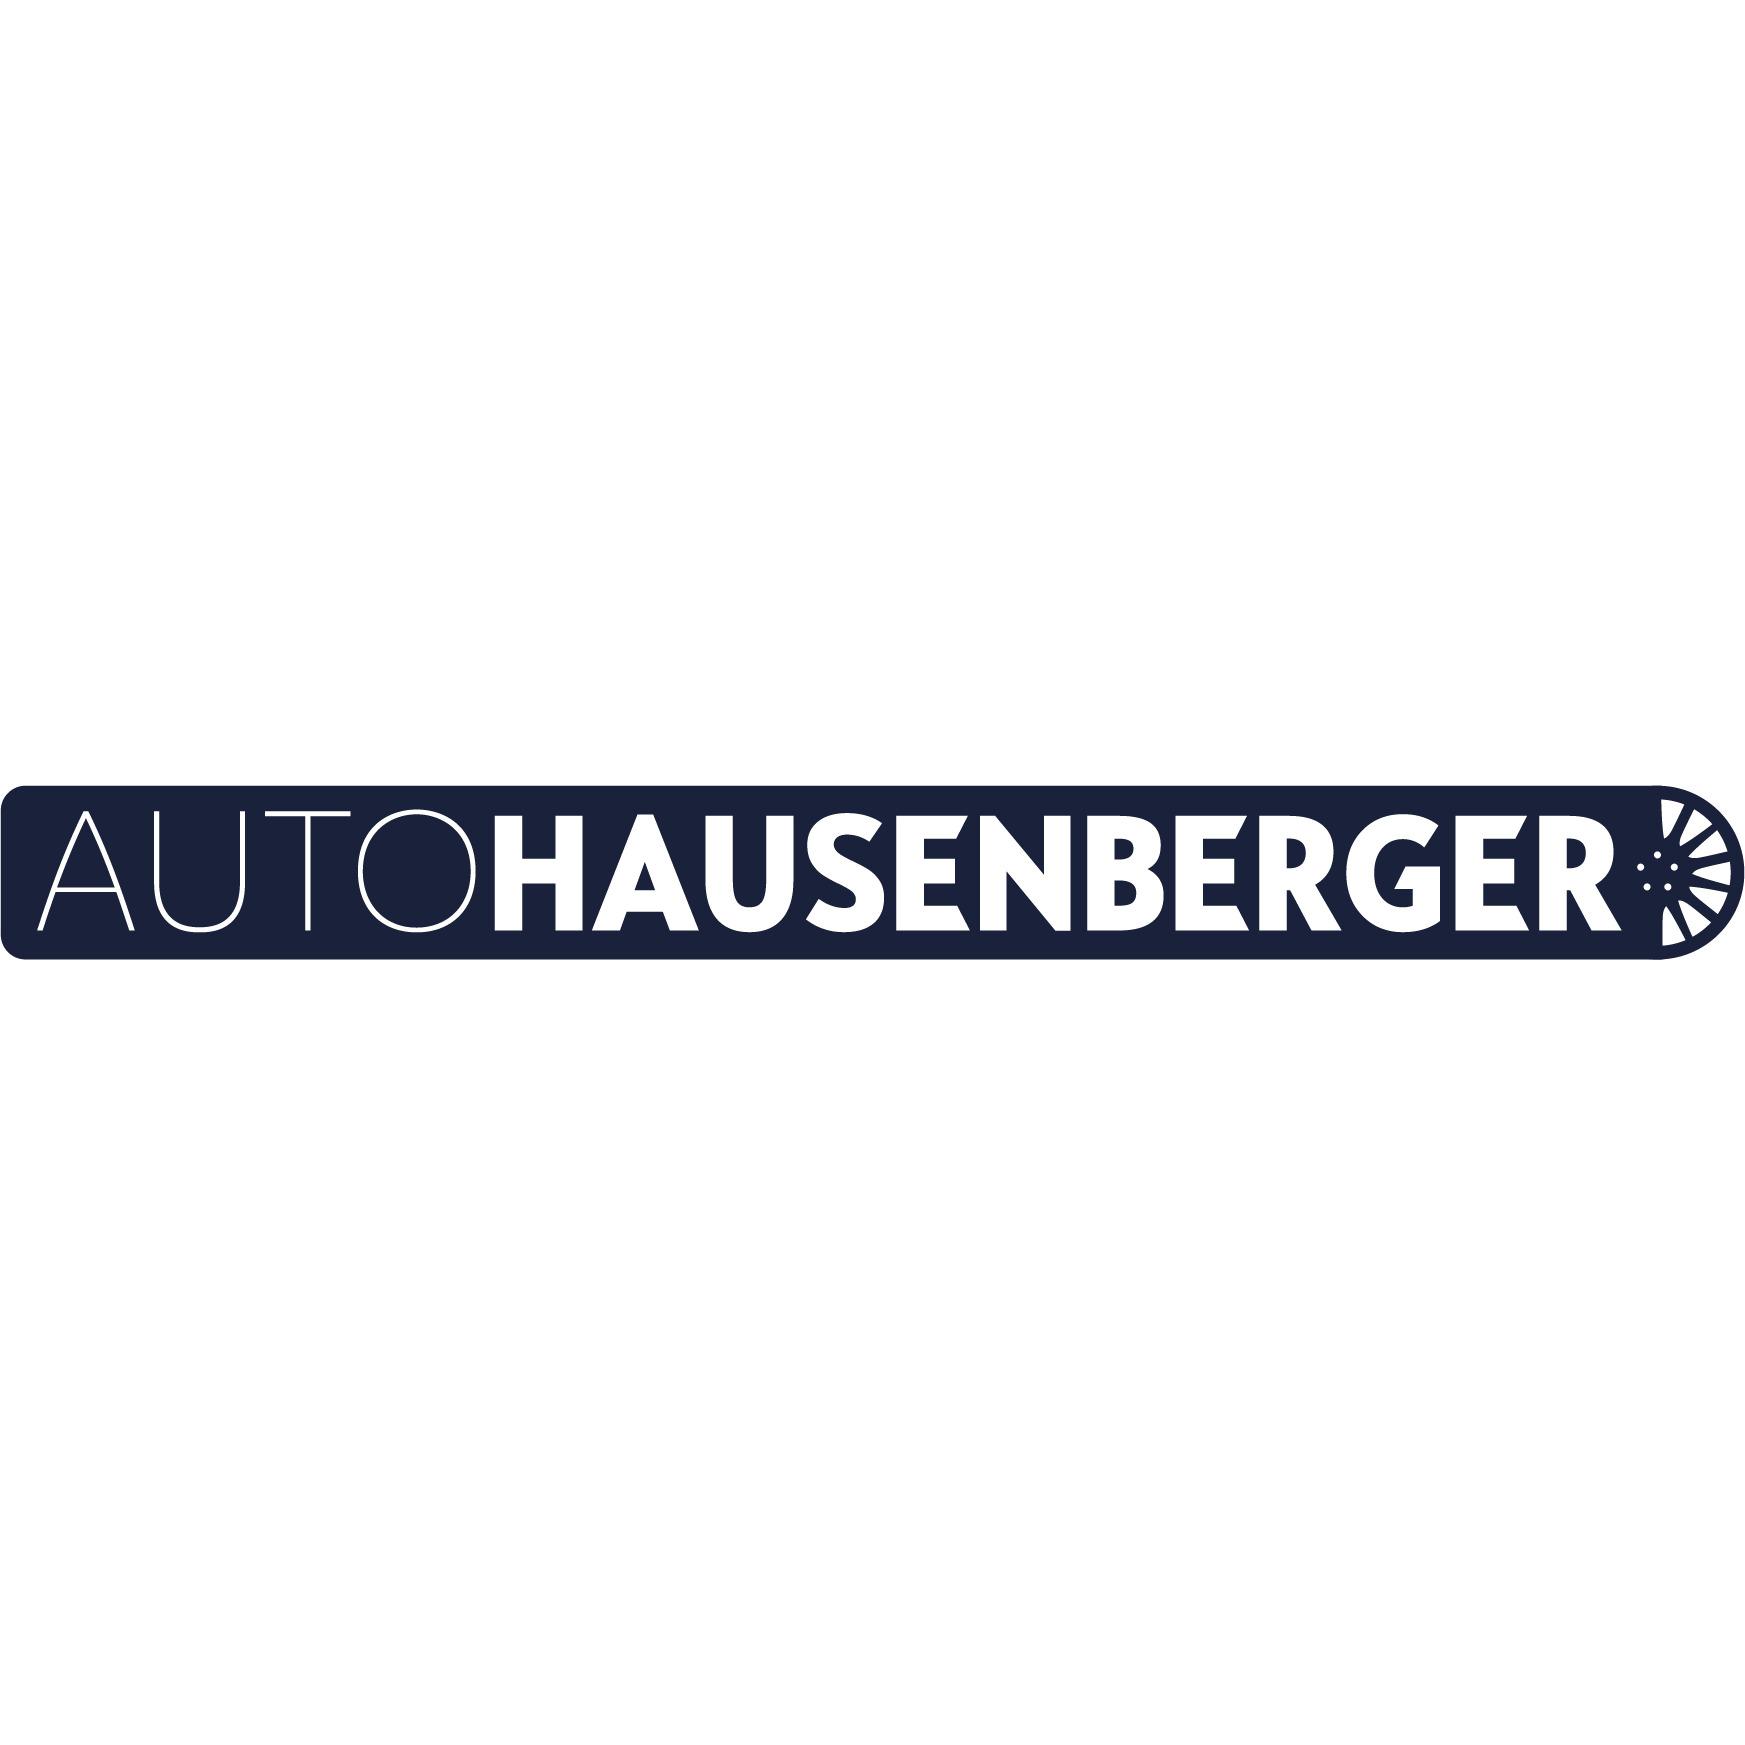 Auto Hausenberger Logo